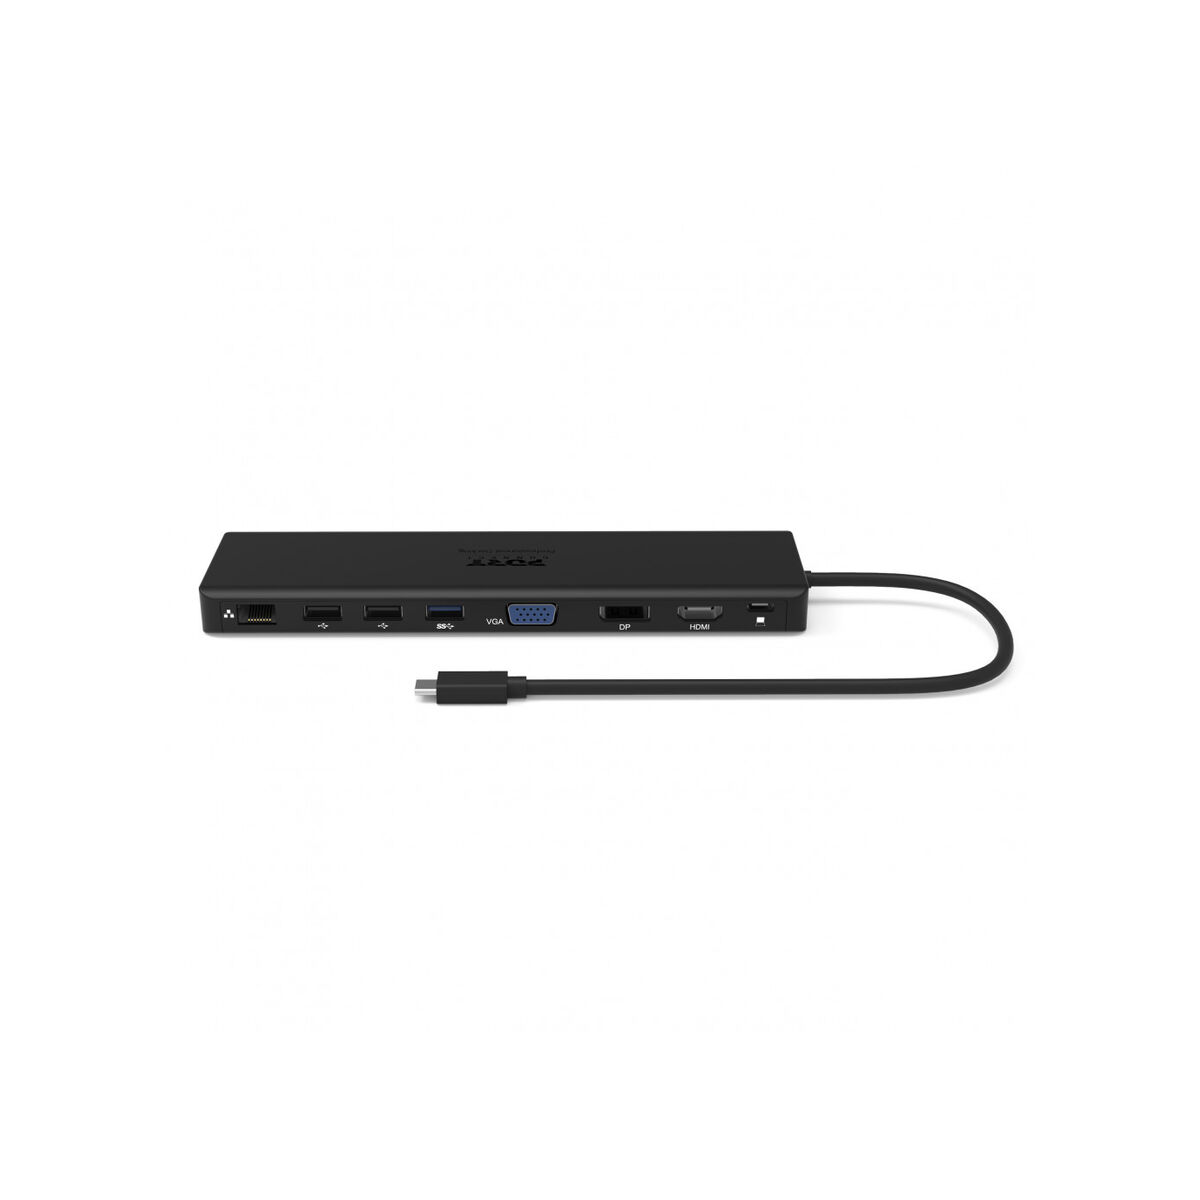 Hub USB Port Designs 901906-W Noir